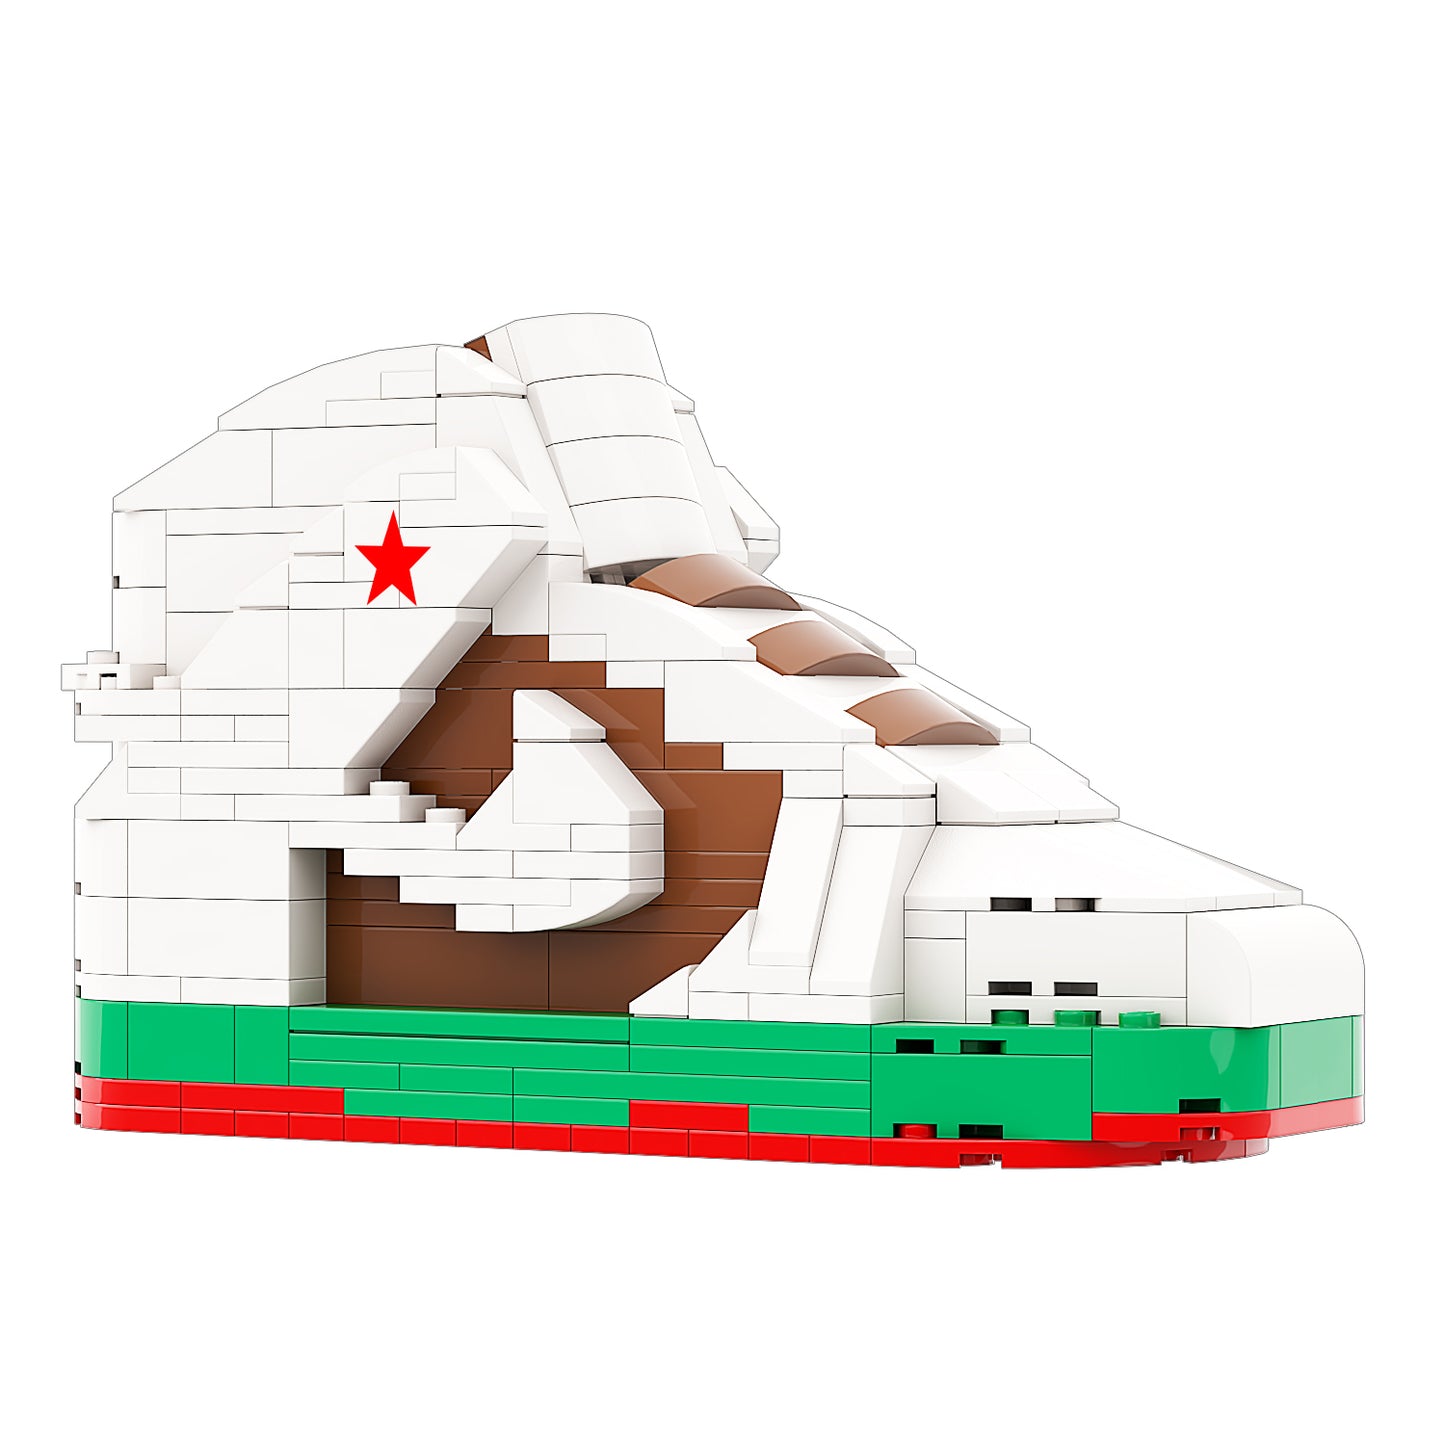 REGULAR  "Dunk High California" Sneaker Bricks with Mini Figure